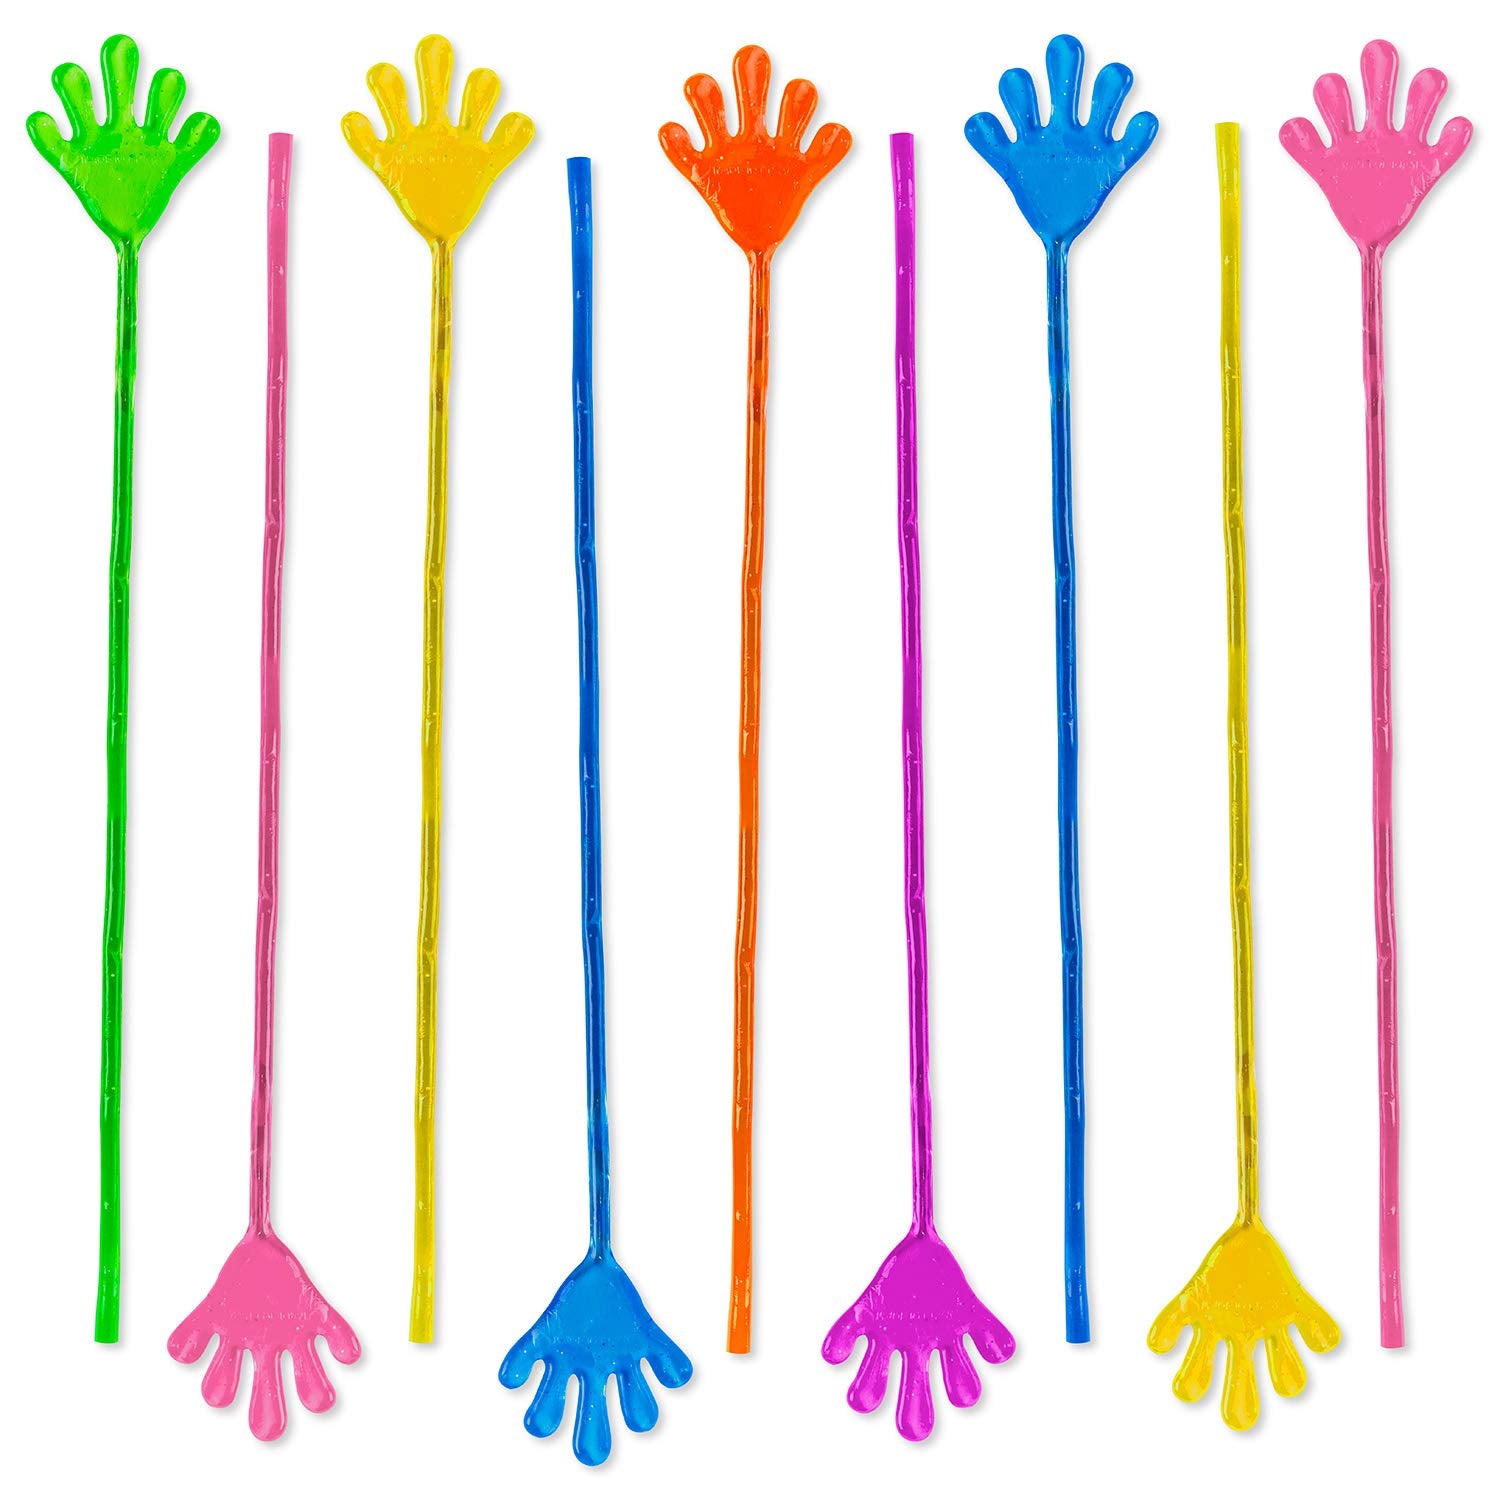 Super Z Outlet Vinyl Glitter Mini Sticky Hands Toys for Children Party Favors, Birthdays - 1 1/4" (72 Count)